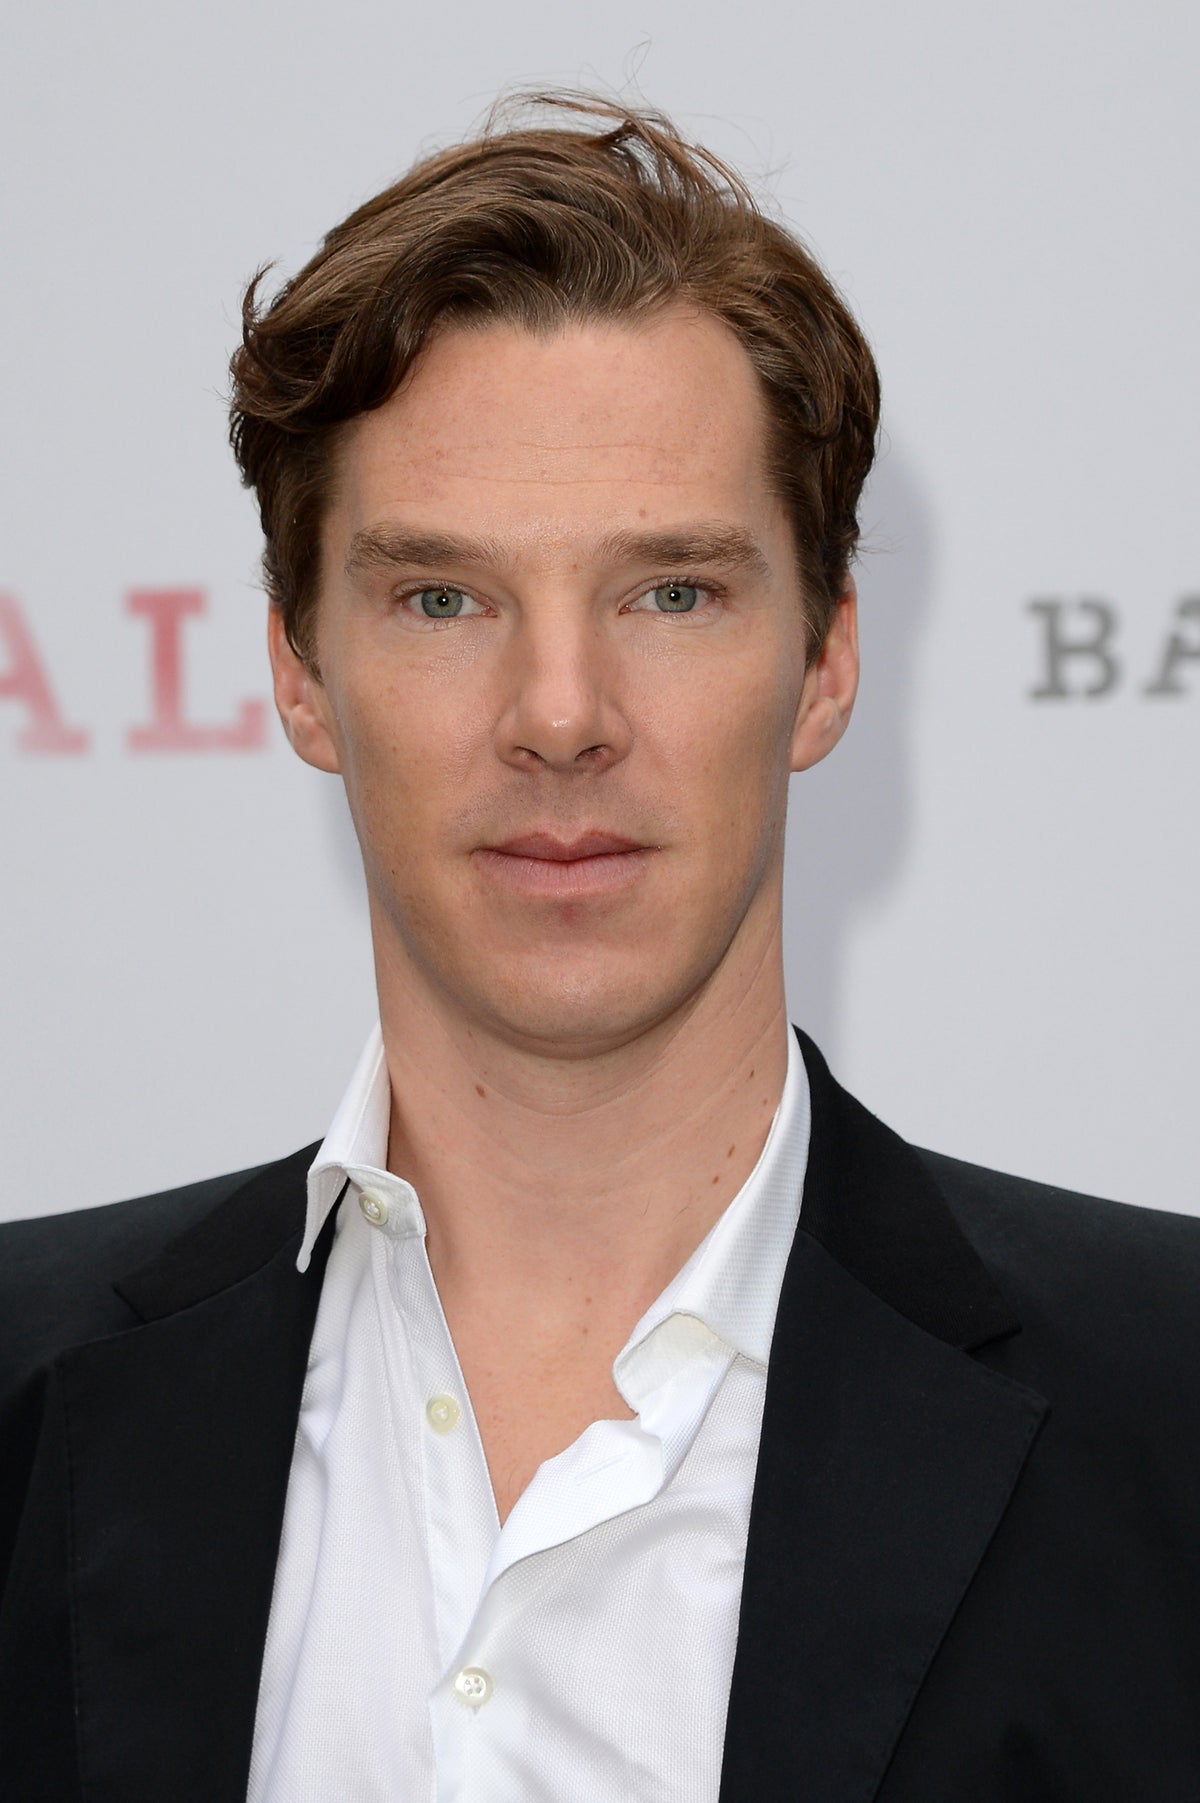 Should he baldly go? Benedict Cumberbatch found Star Trek Into Darkness hairdo biggest challenge